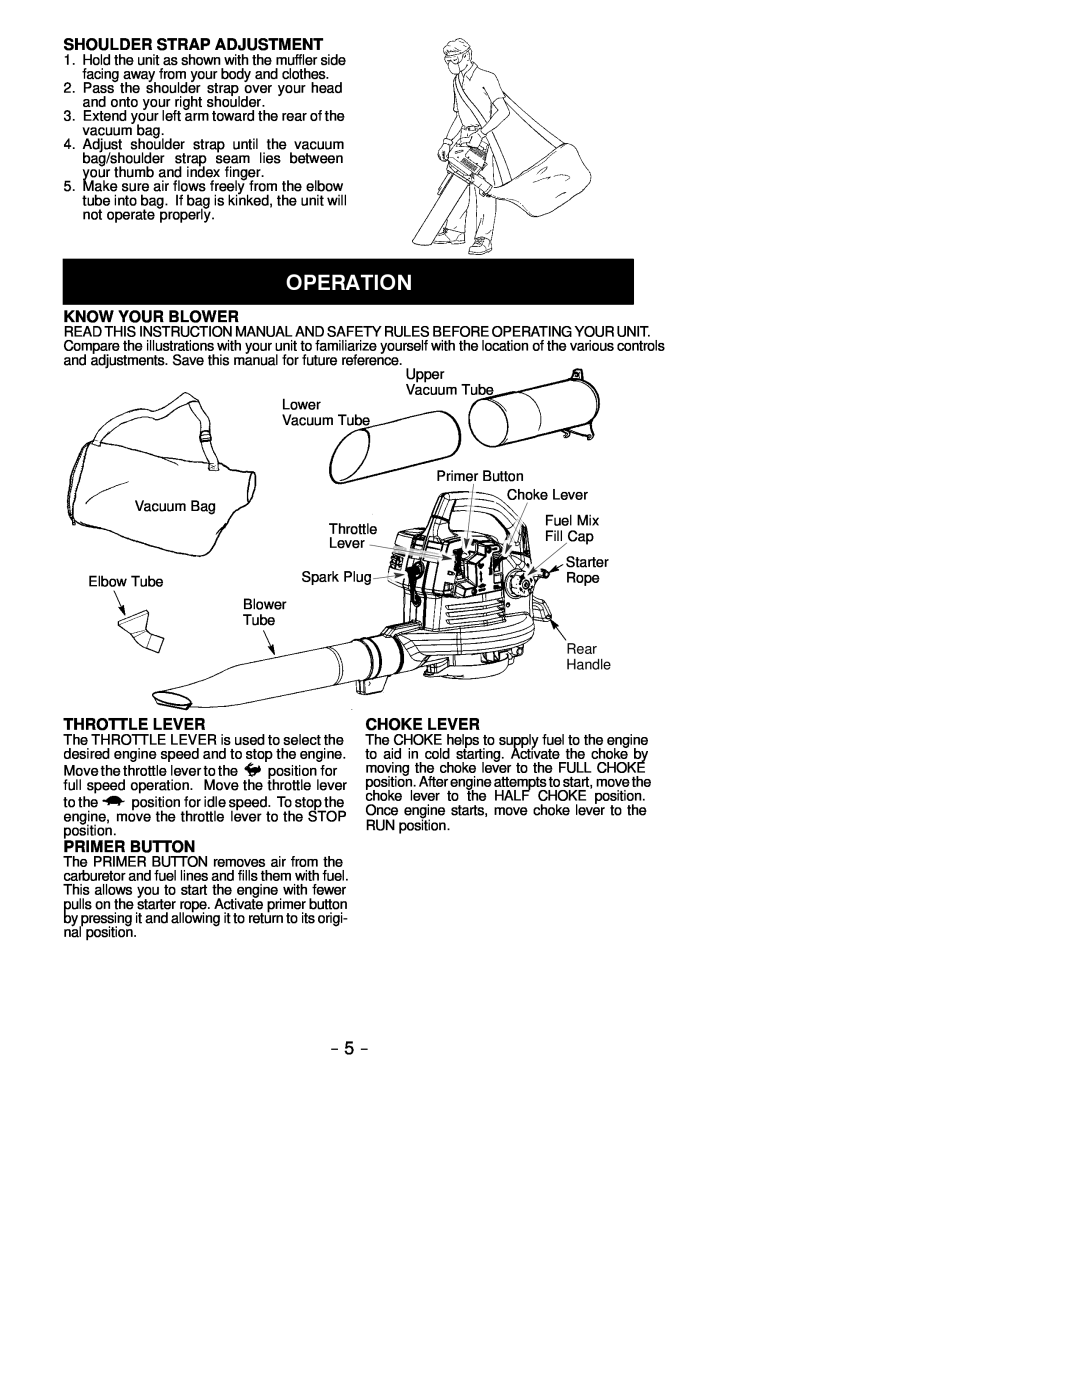 Poulan 530163805 instruction manual Shoulder Strap Adjustment, Know Your Blower, Throttle Lever, Primer Button, Choke Lever 